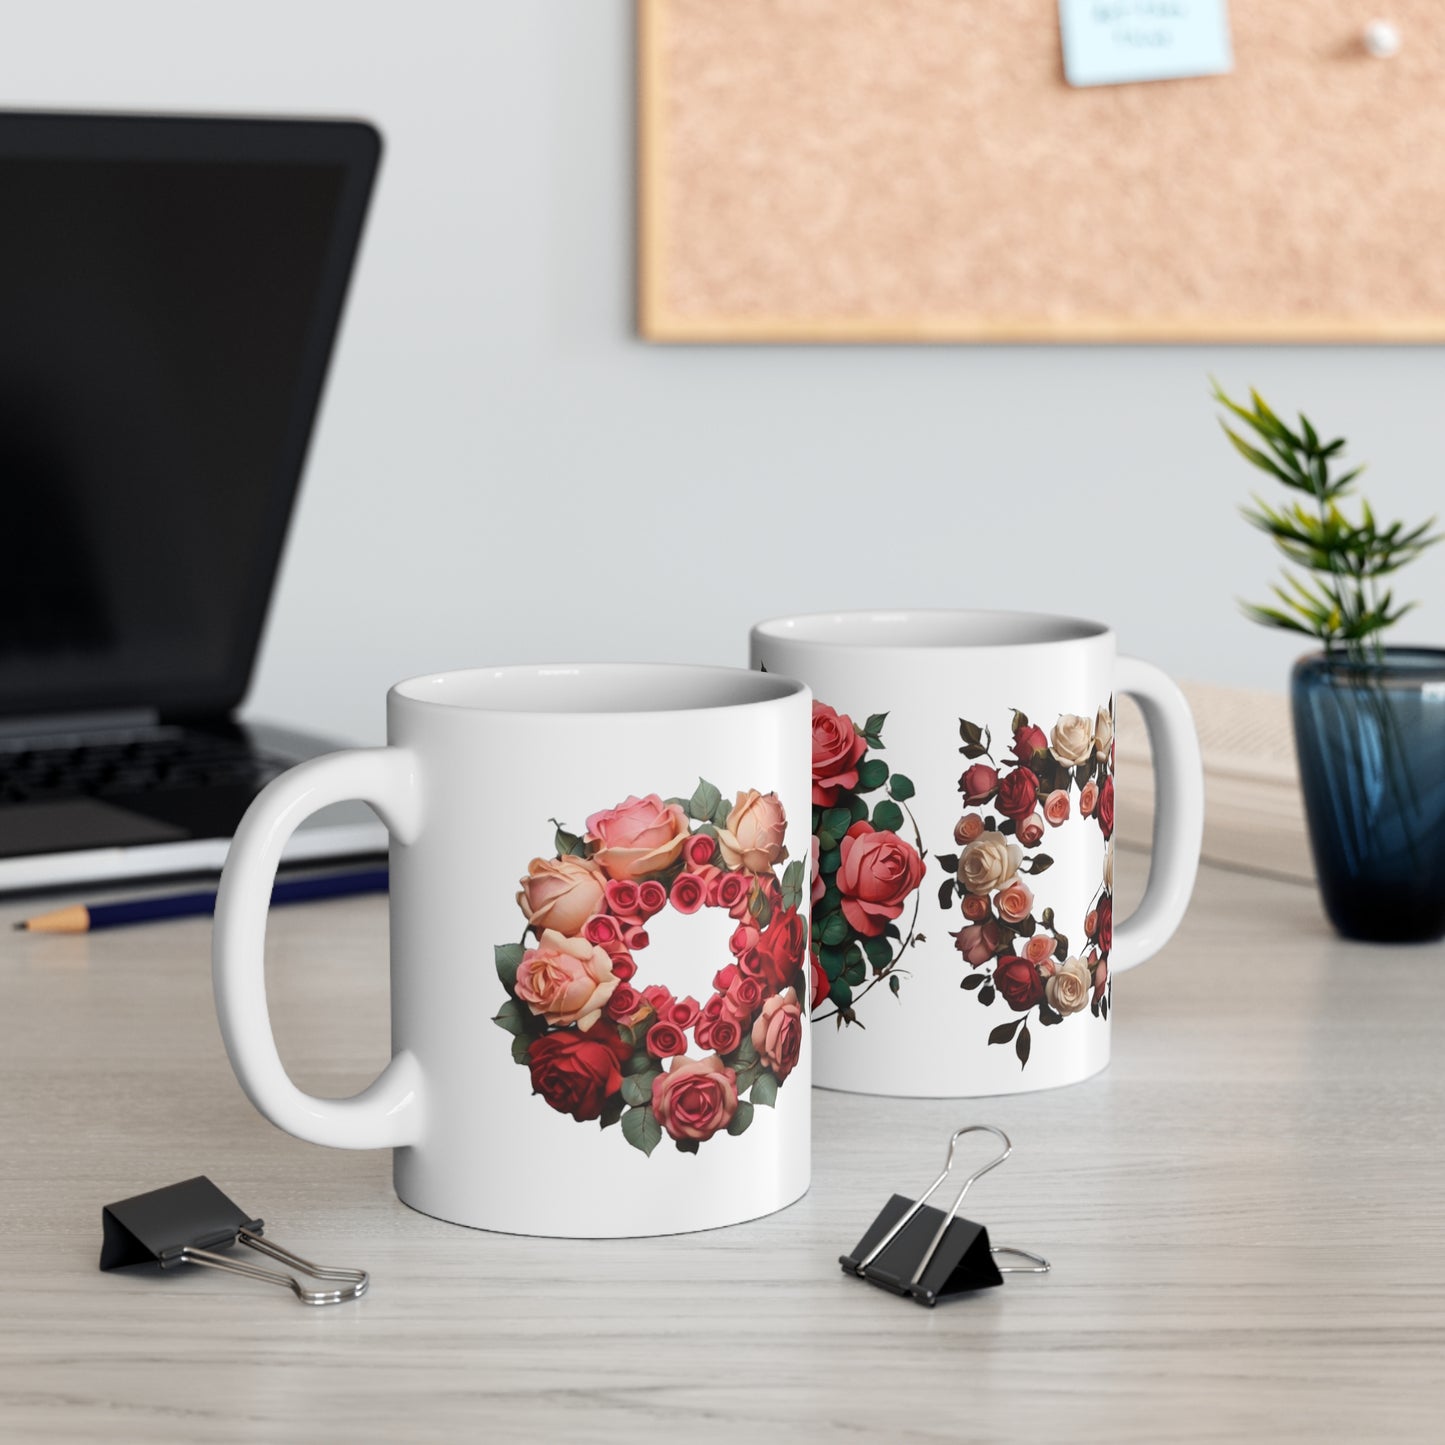 Bundle Of Roses Mug - Ceramic Coffee Mug 11oz